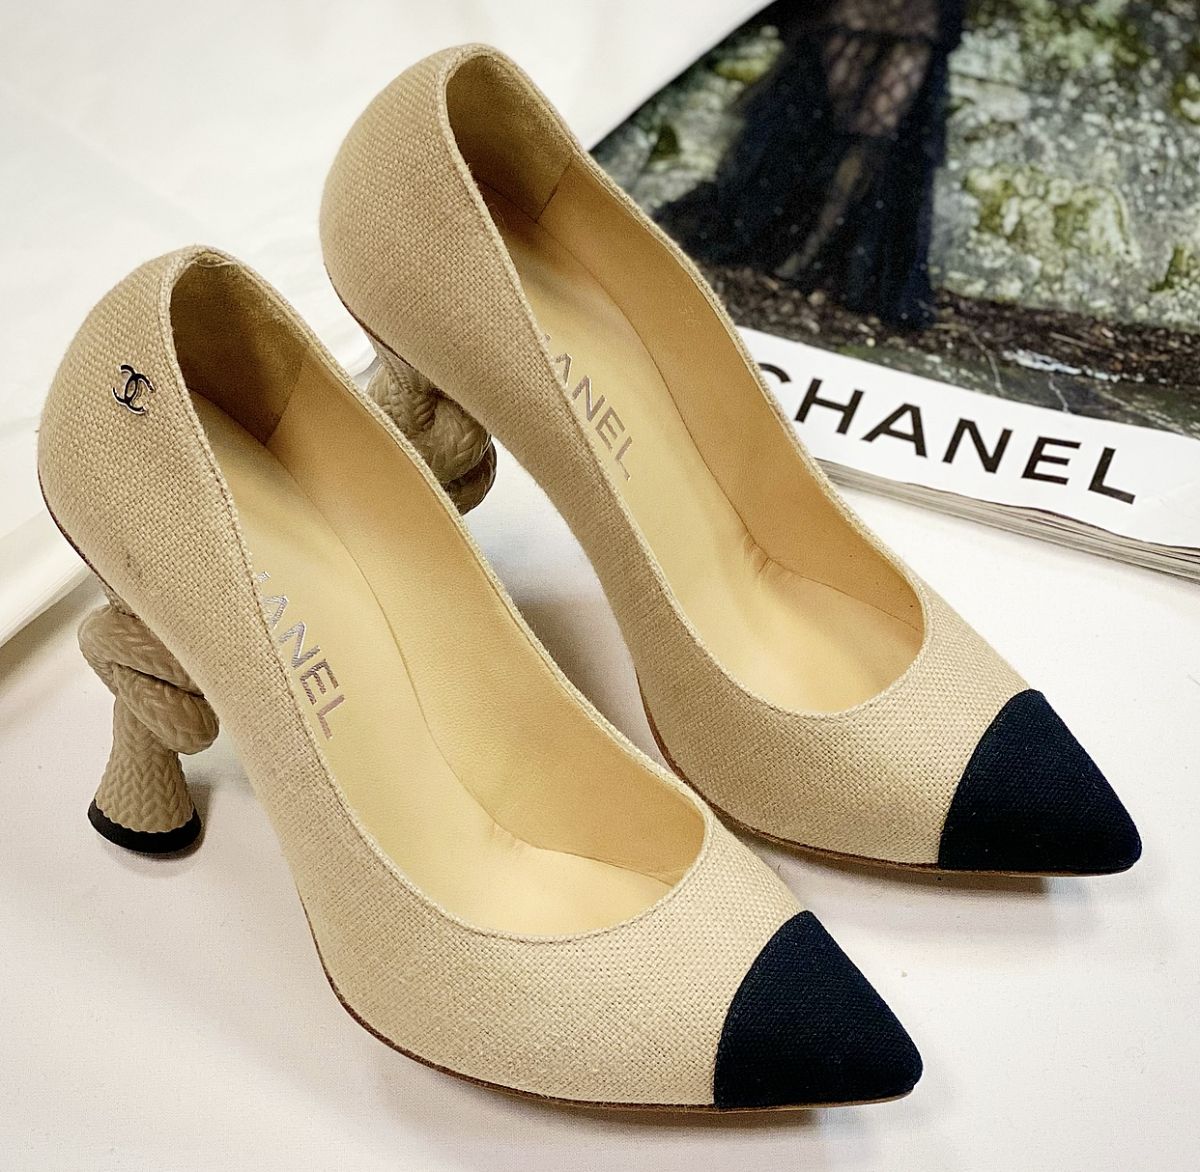 Туфли Chanel размер 37 цена 30 770 руб 